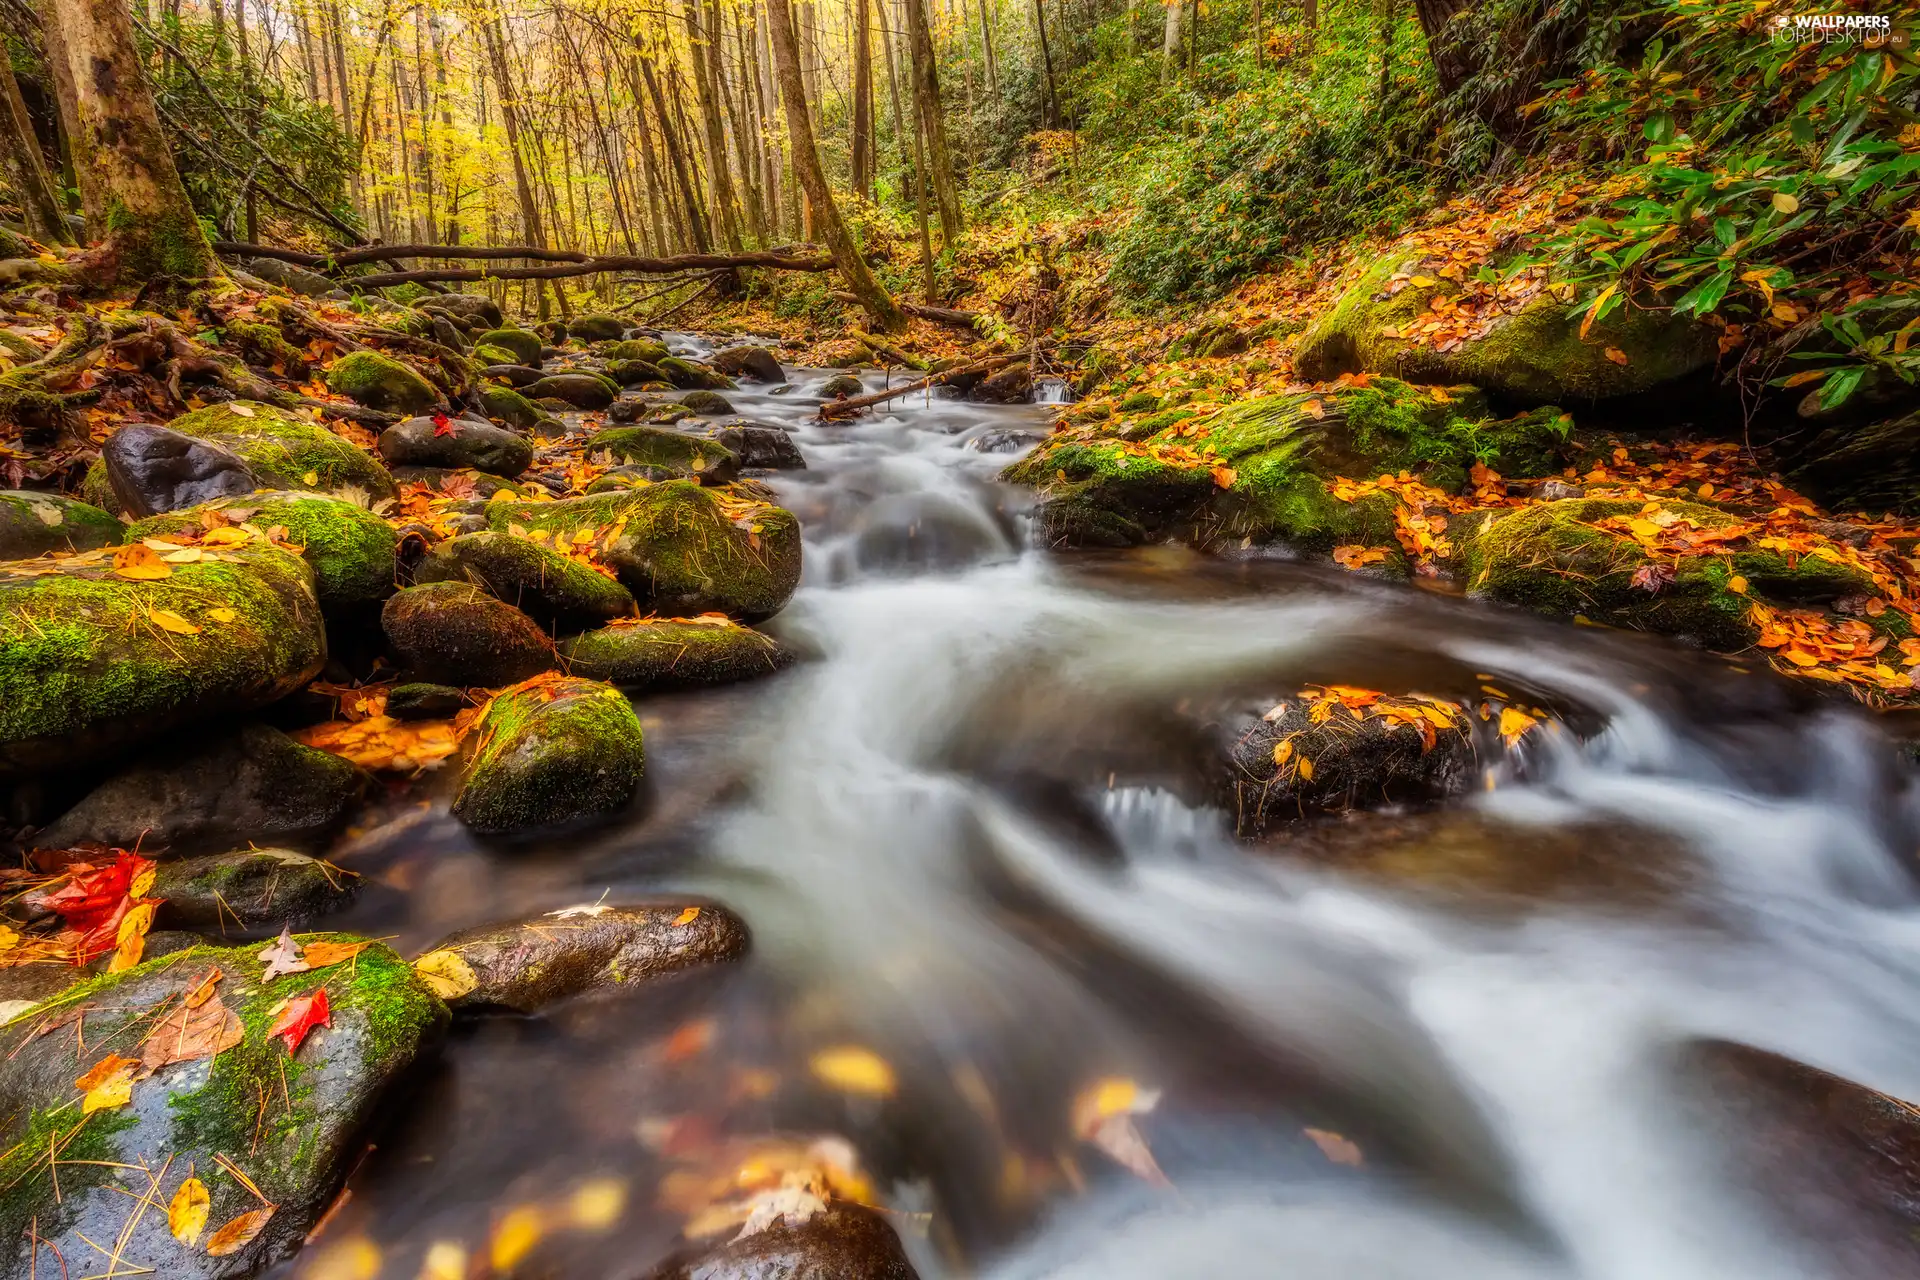 Stones, Leaf, River, autumn, forest